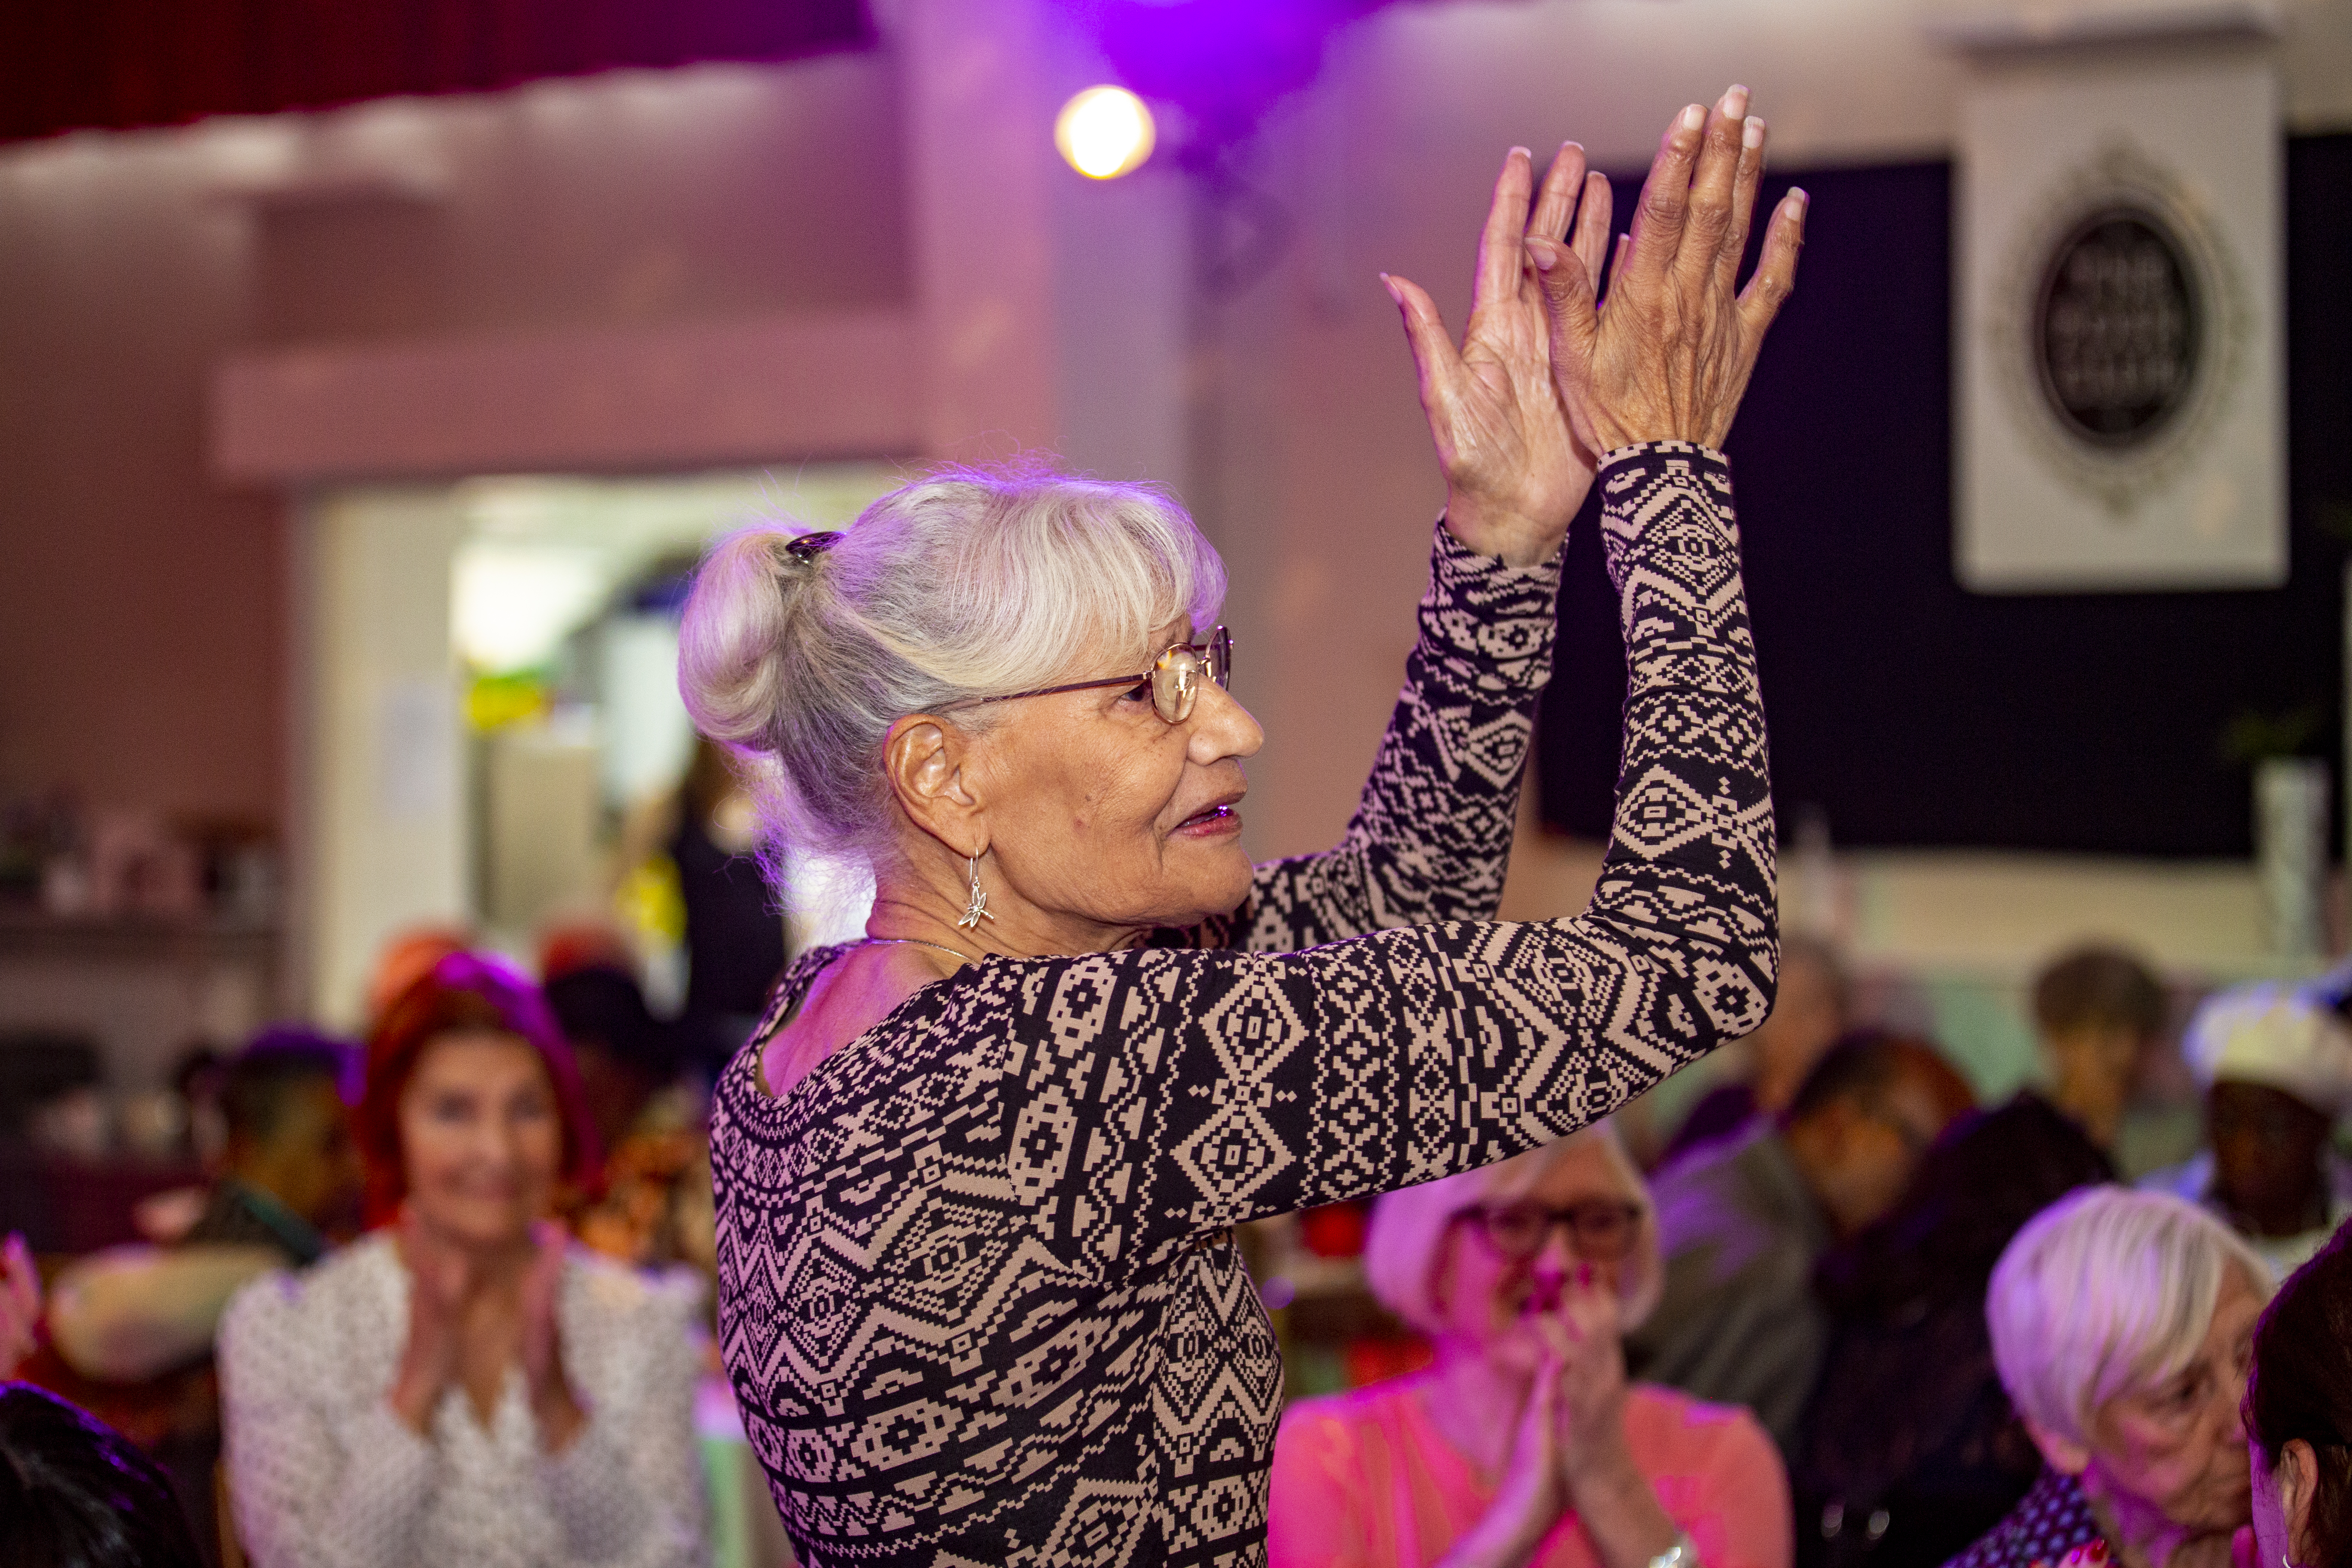 Anita, 78, dances at The Posh Club.